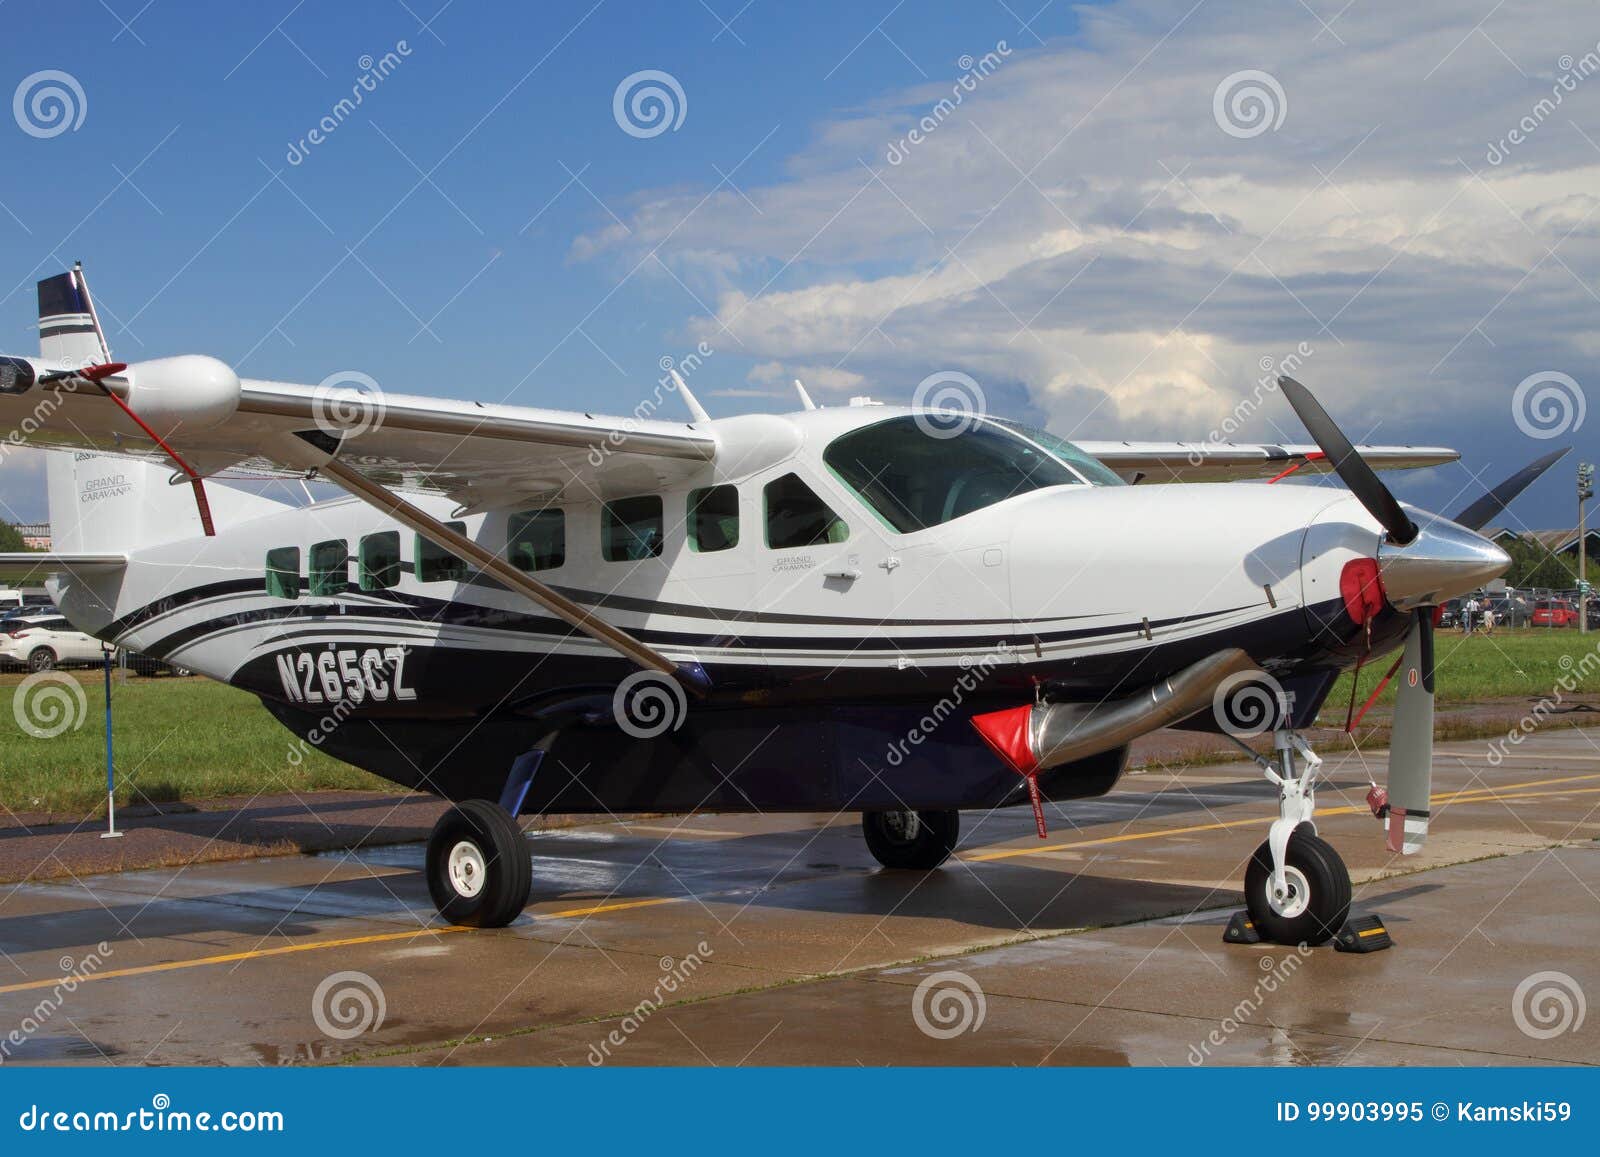 Single Engine Turboprop Planes